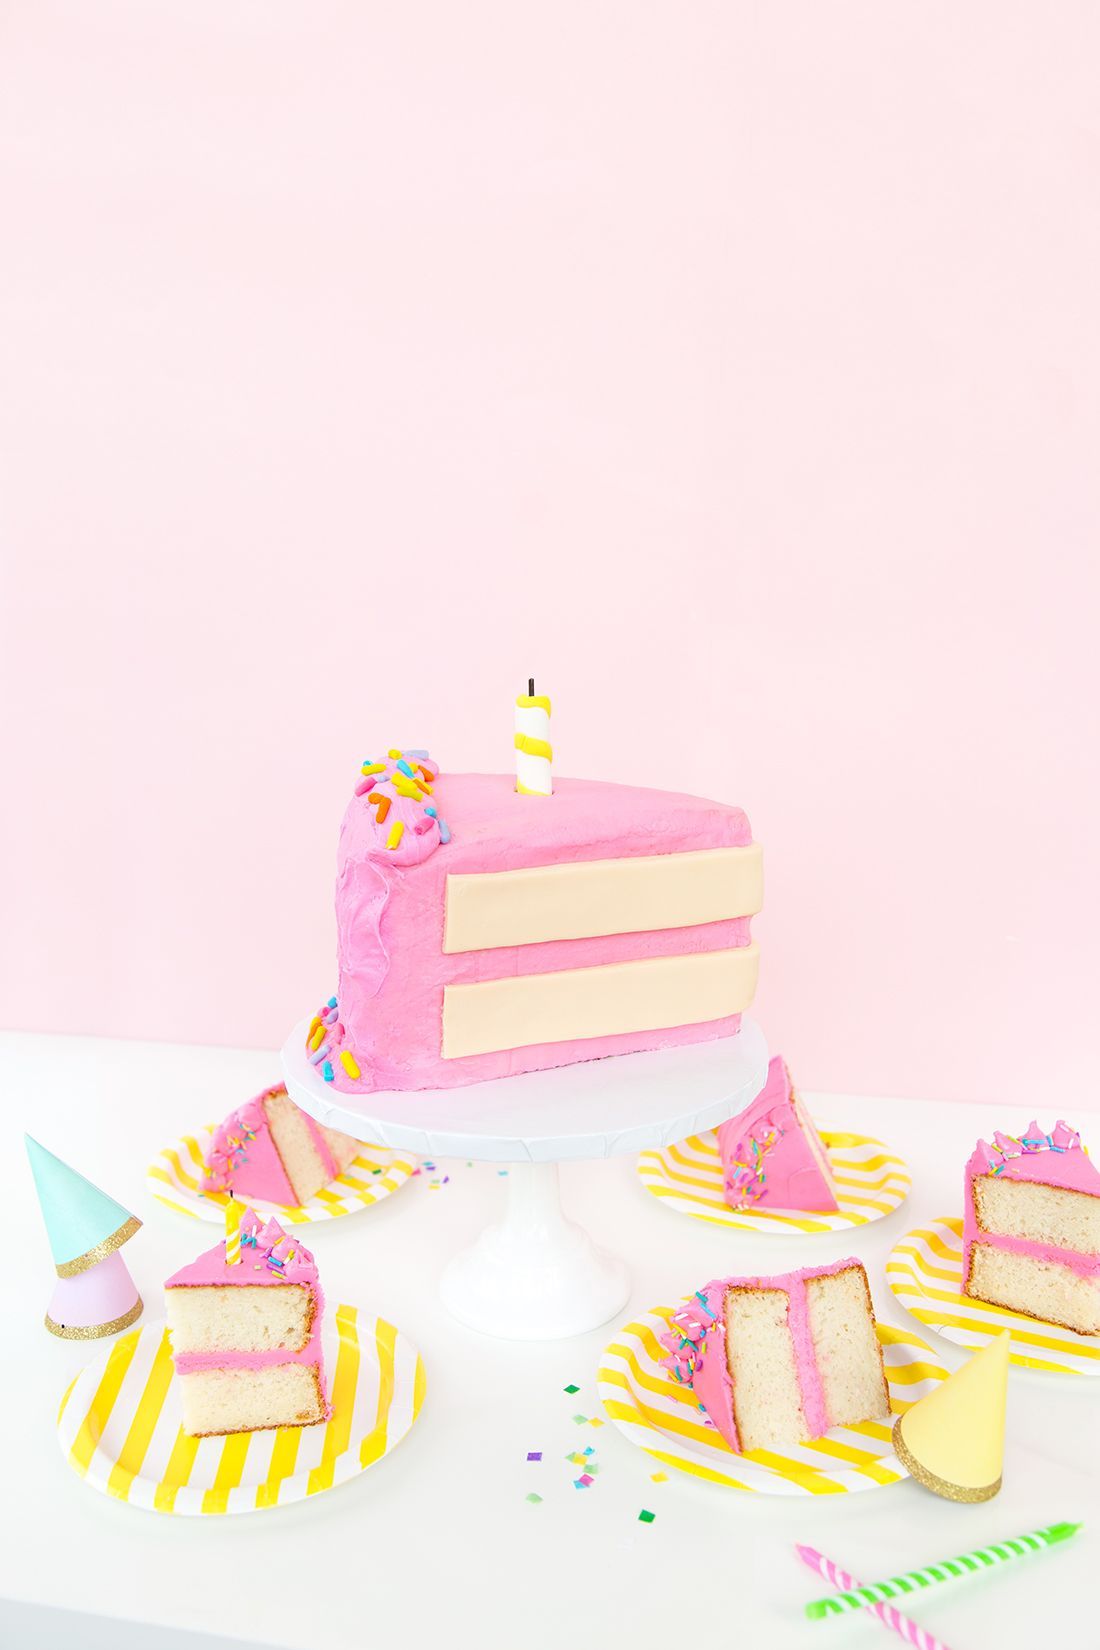 Giant cake, Cake slice, Cake wallpaper.com